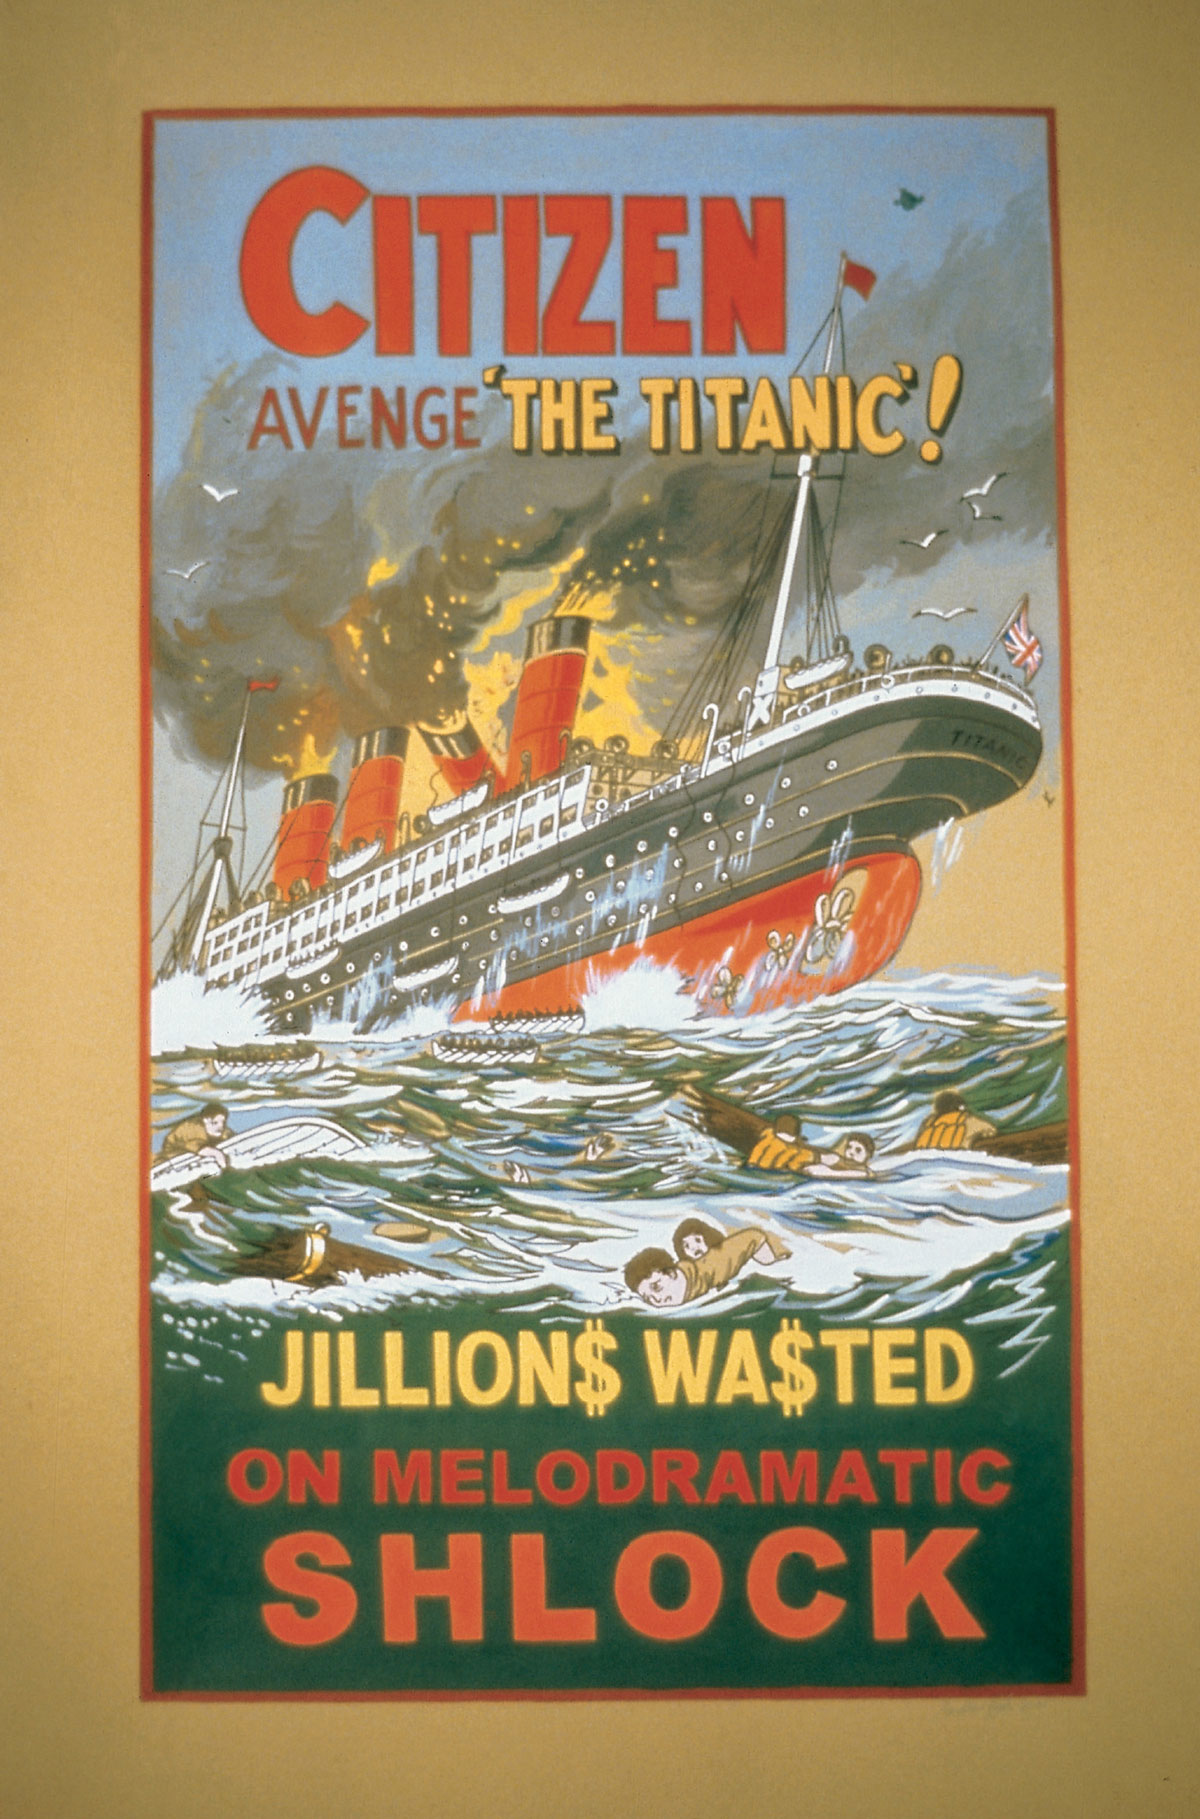 Poster depicting the Titanic sinking, captioned “Avenge the Titanic! Jillions Wasted on Melodramatic Shock.”